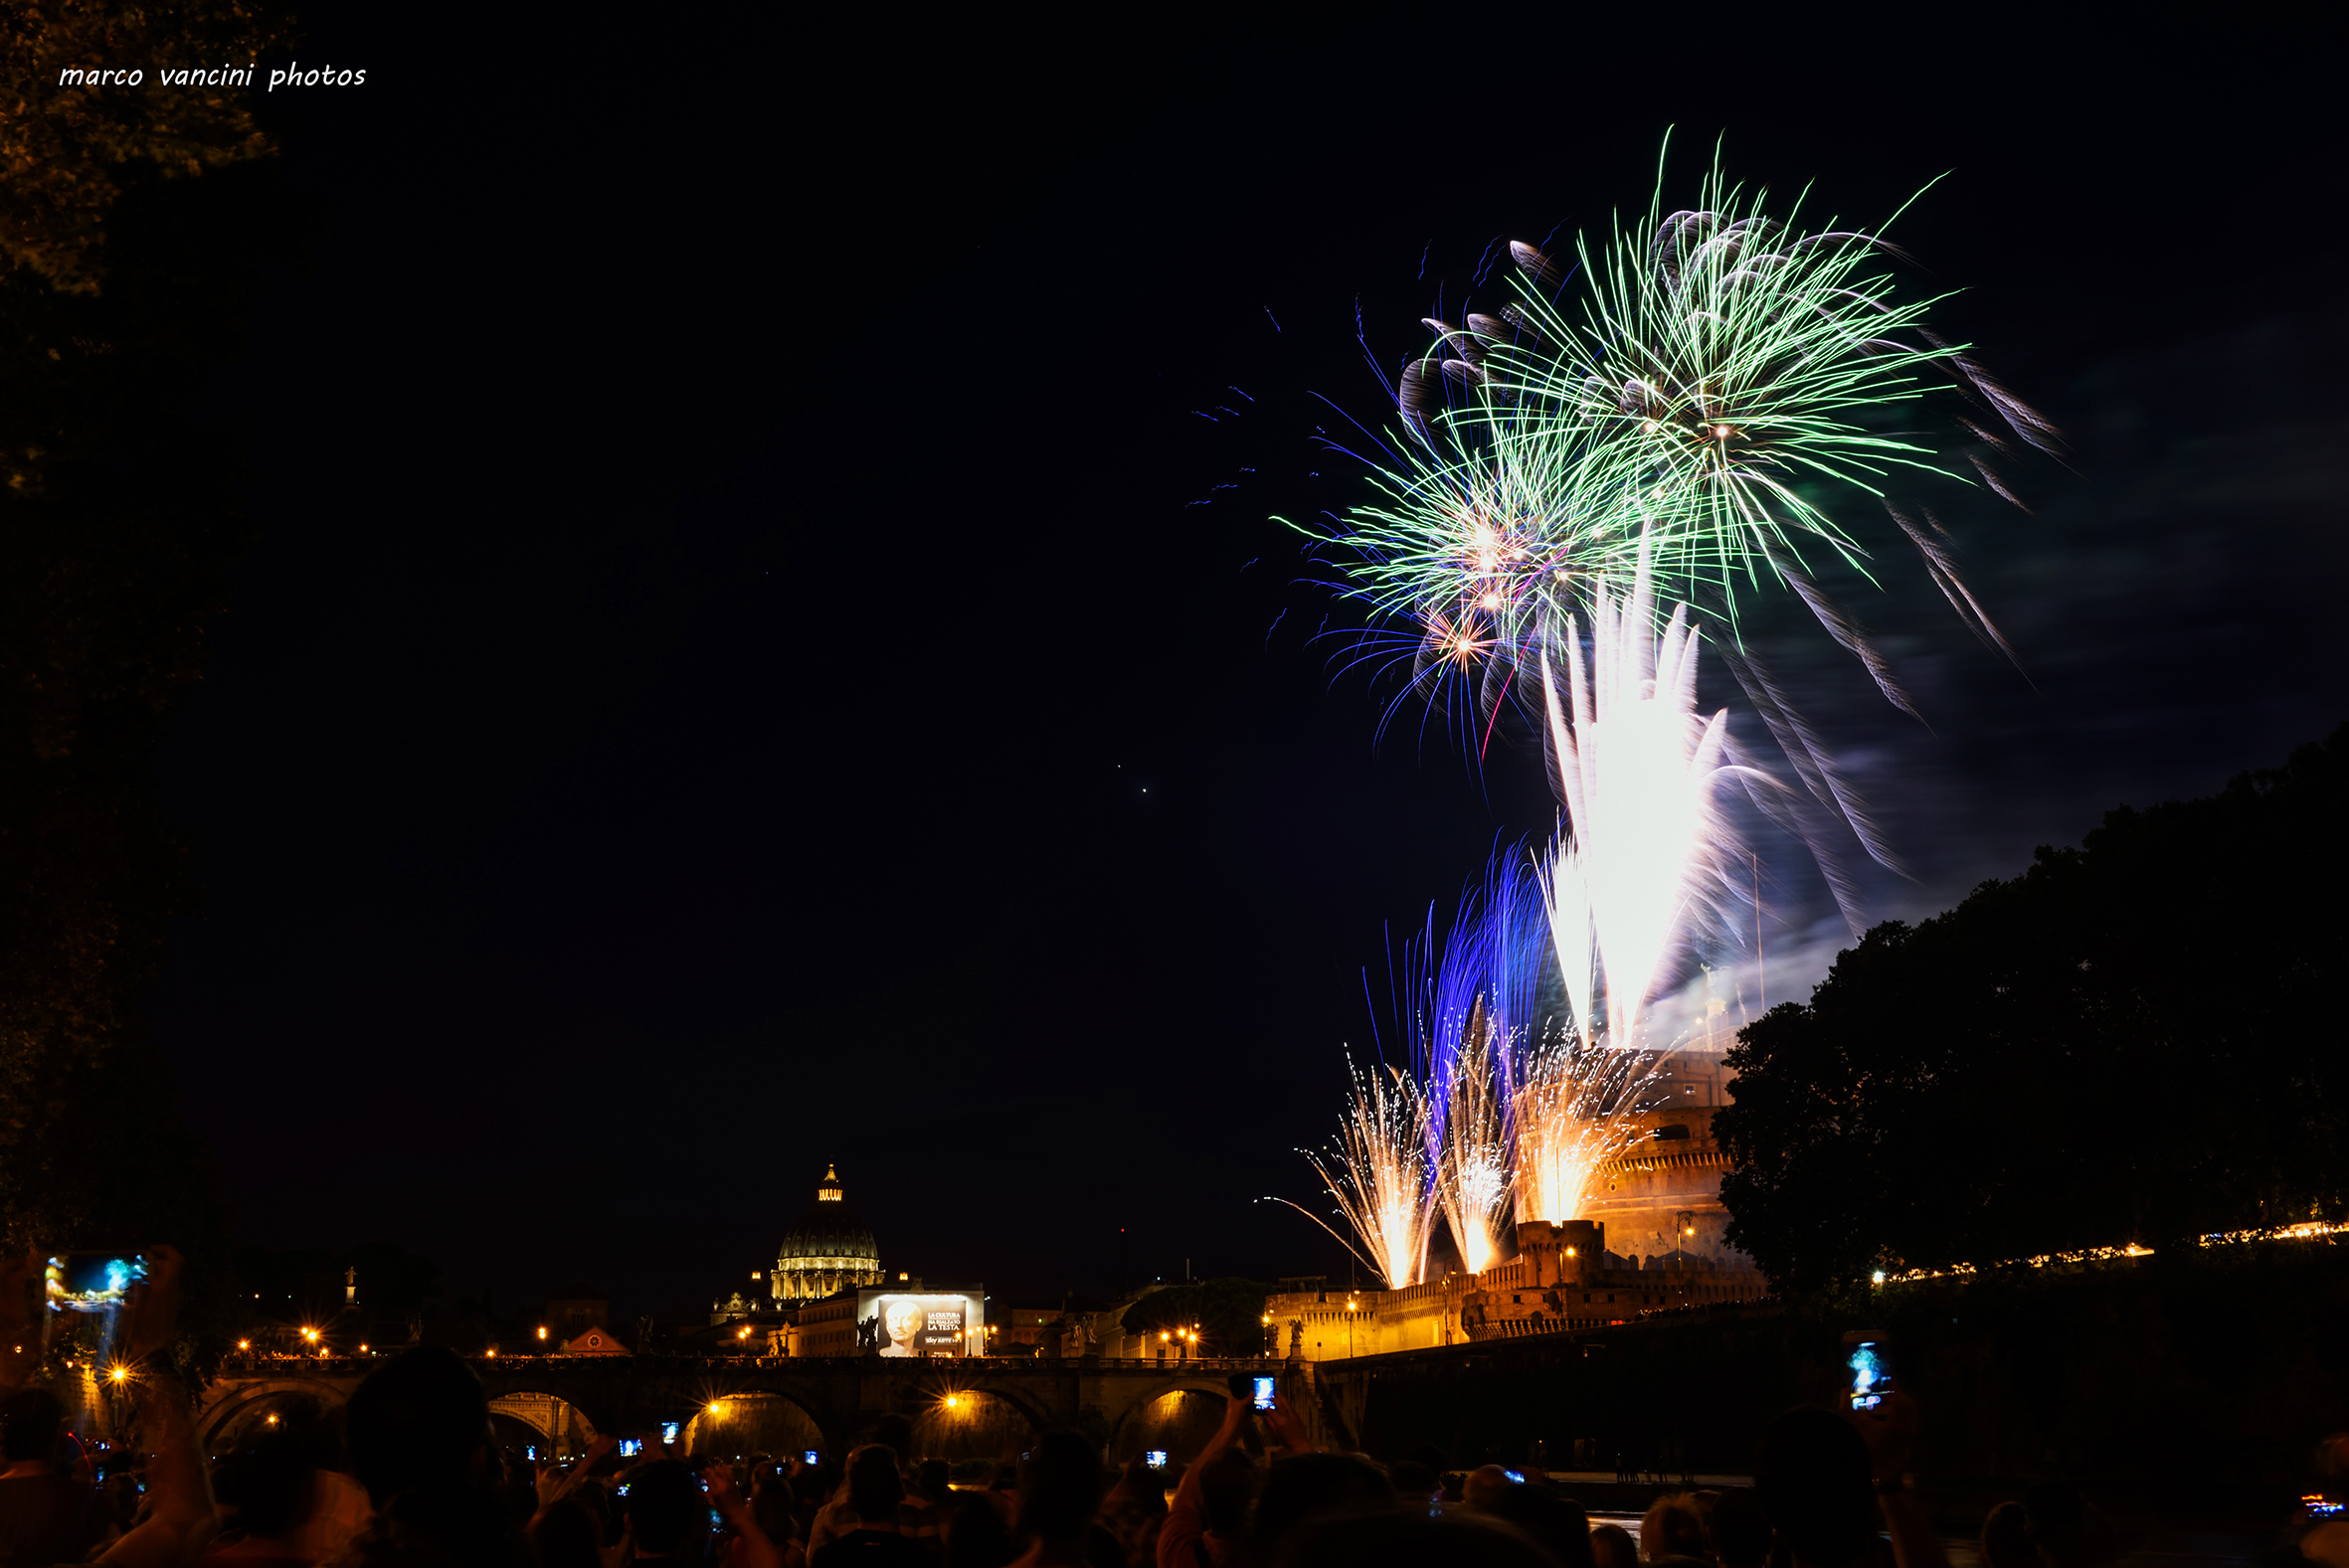 Fireworks in rome...